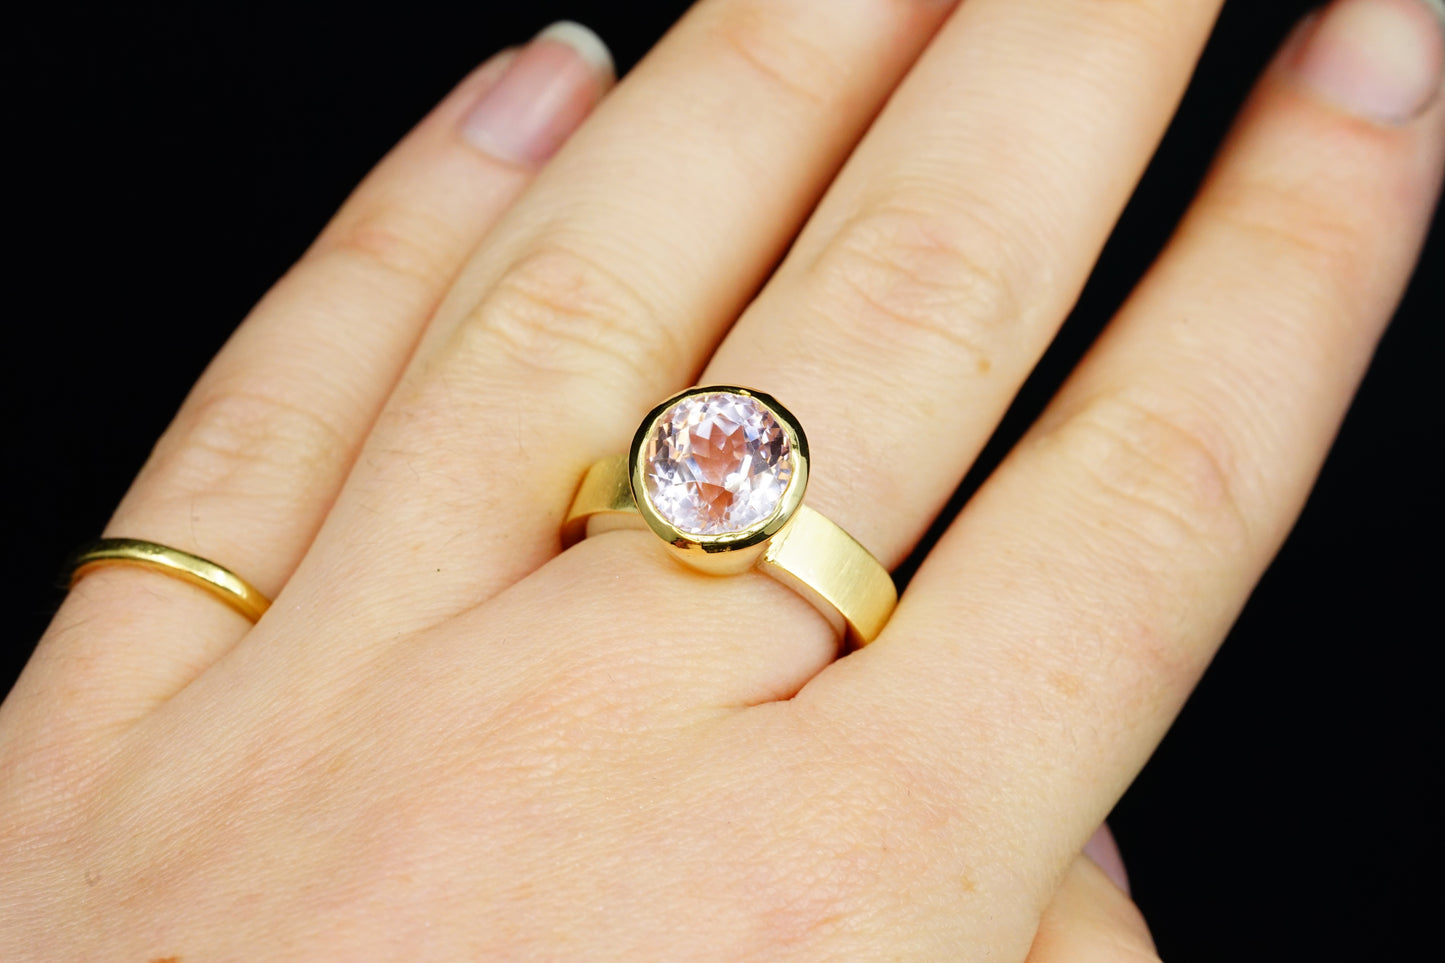 Large Kunzite Ring with Gold Overlay